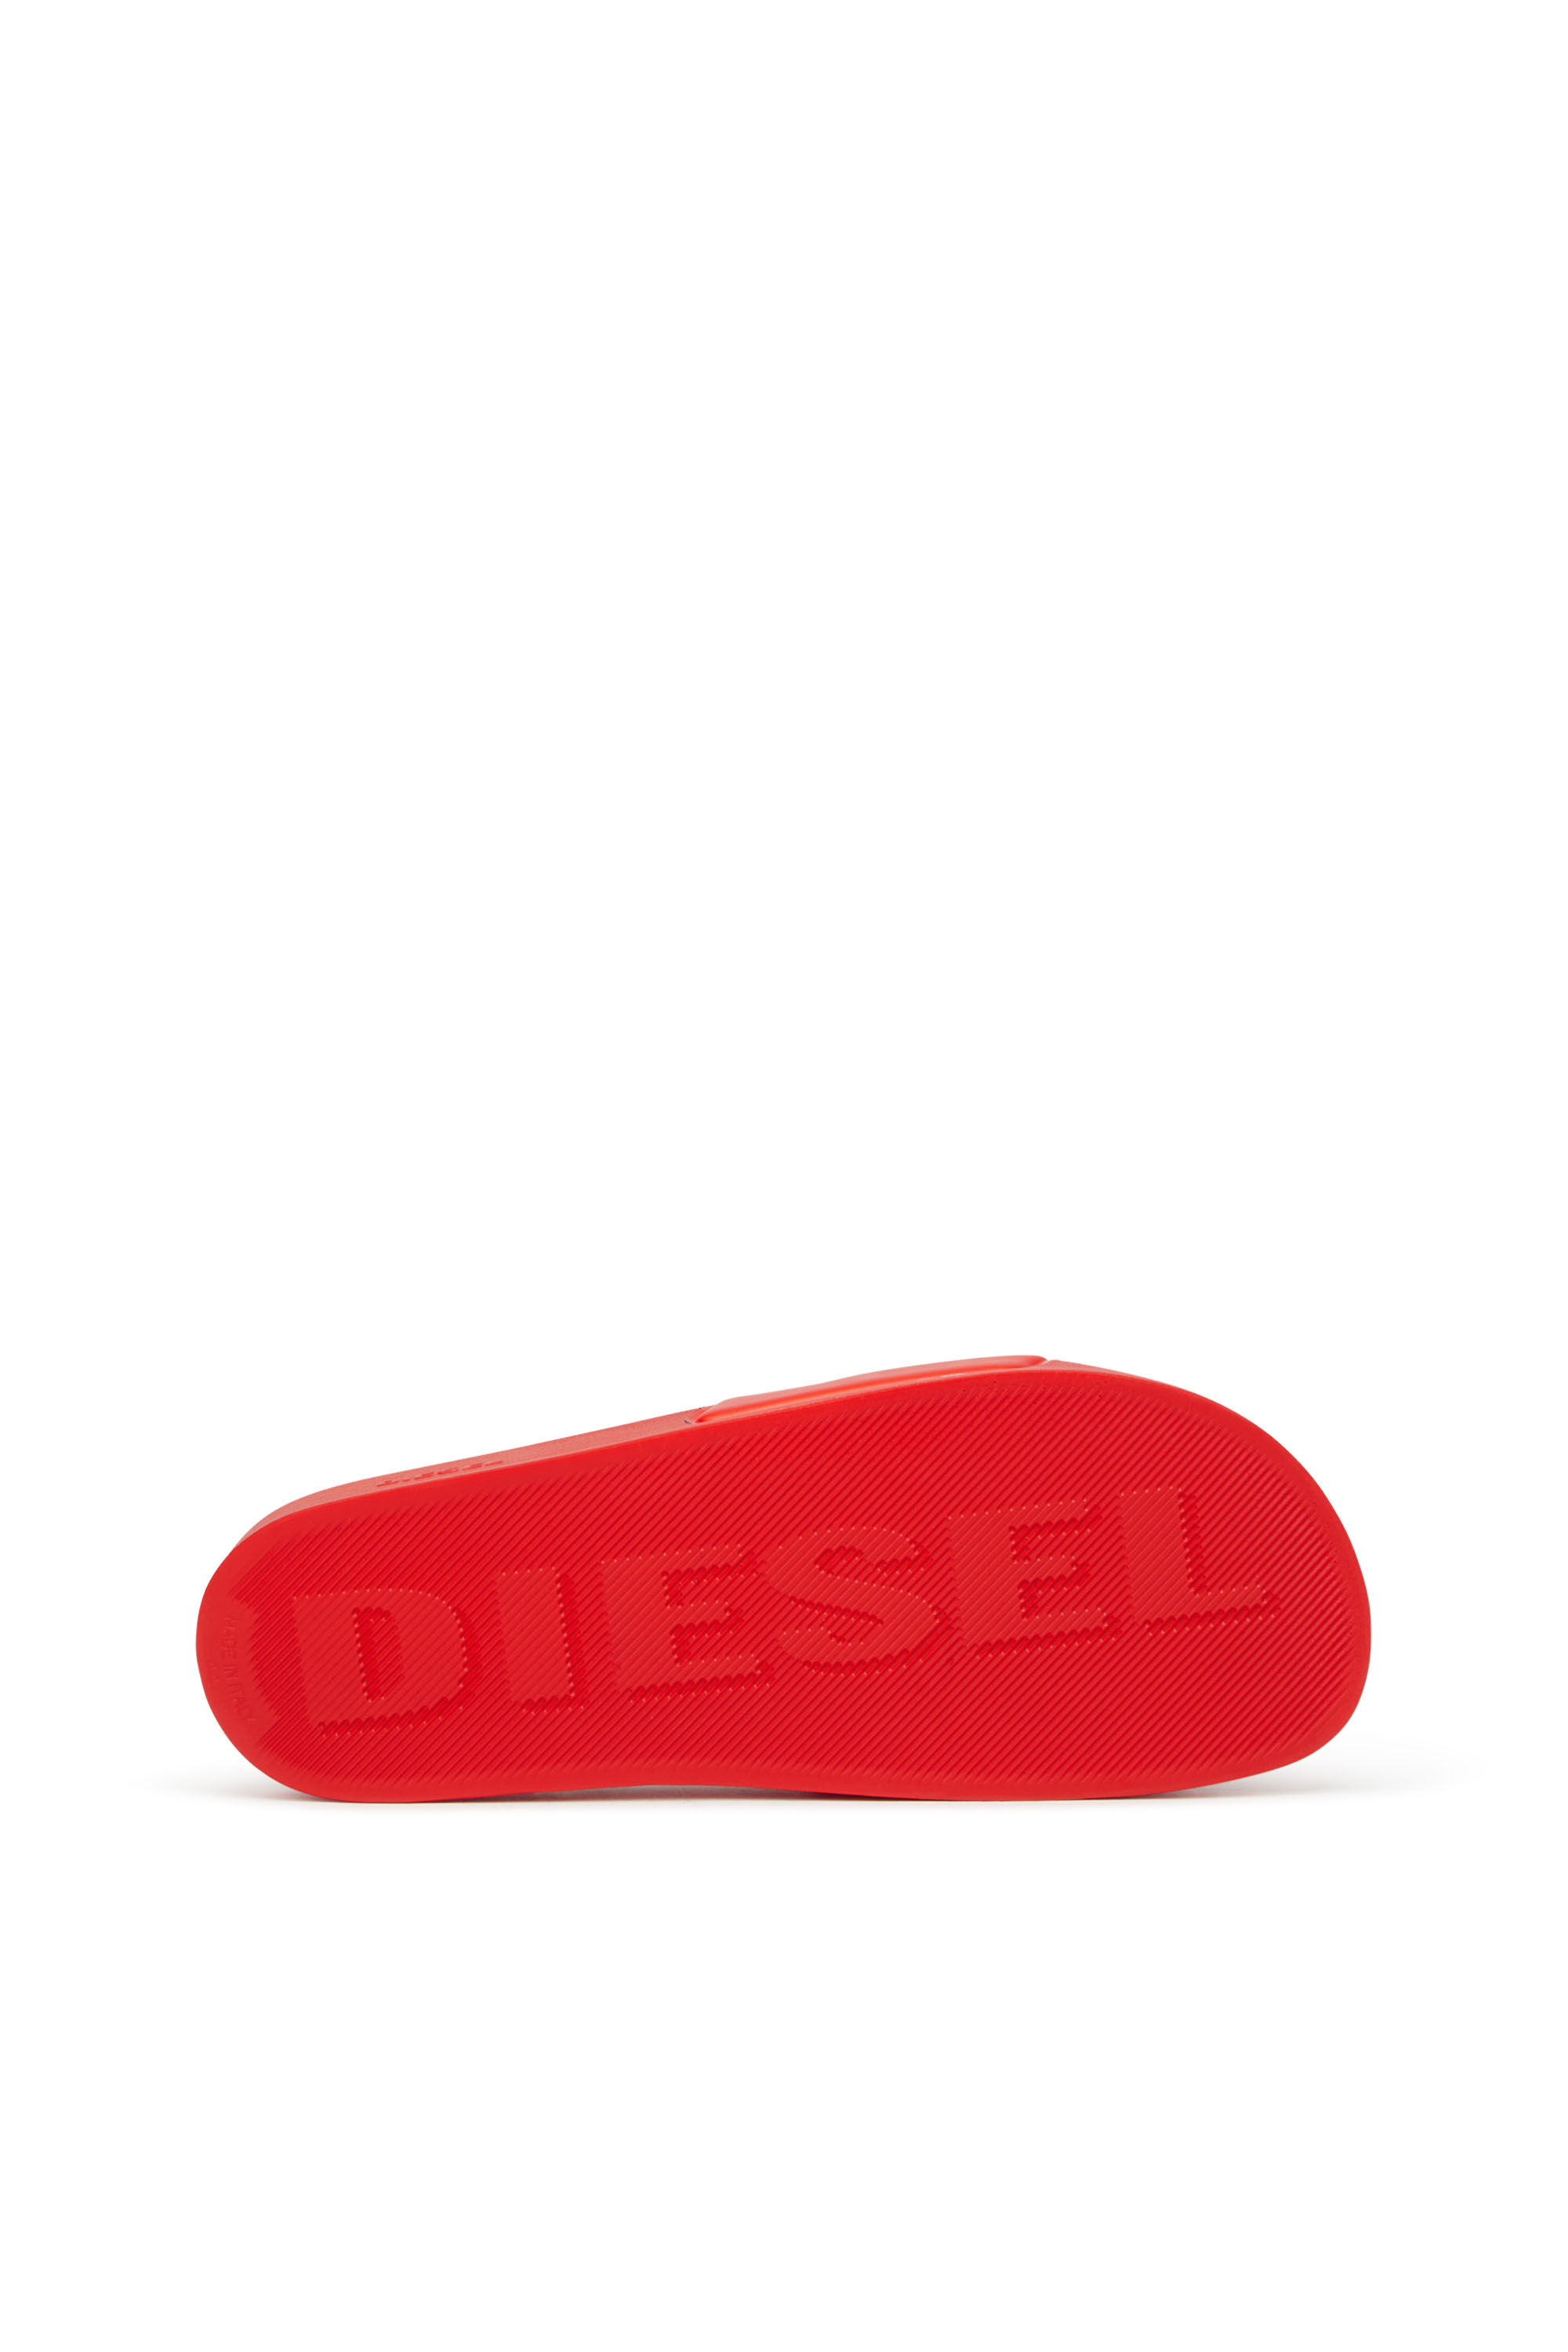 Diesel - SA-MAYEMI D, Red - Image 5